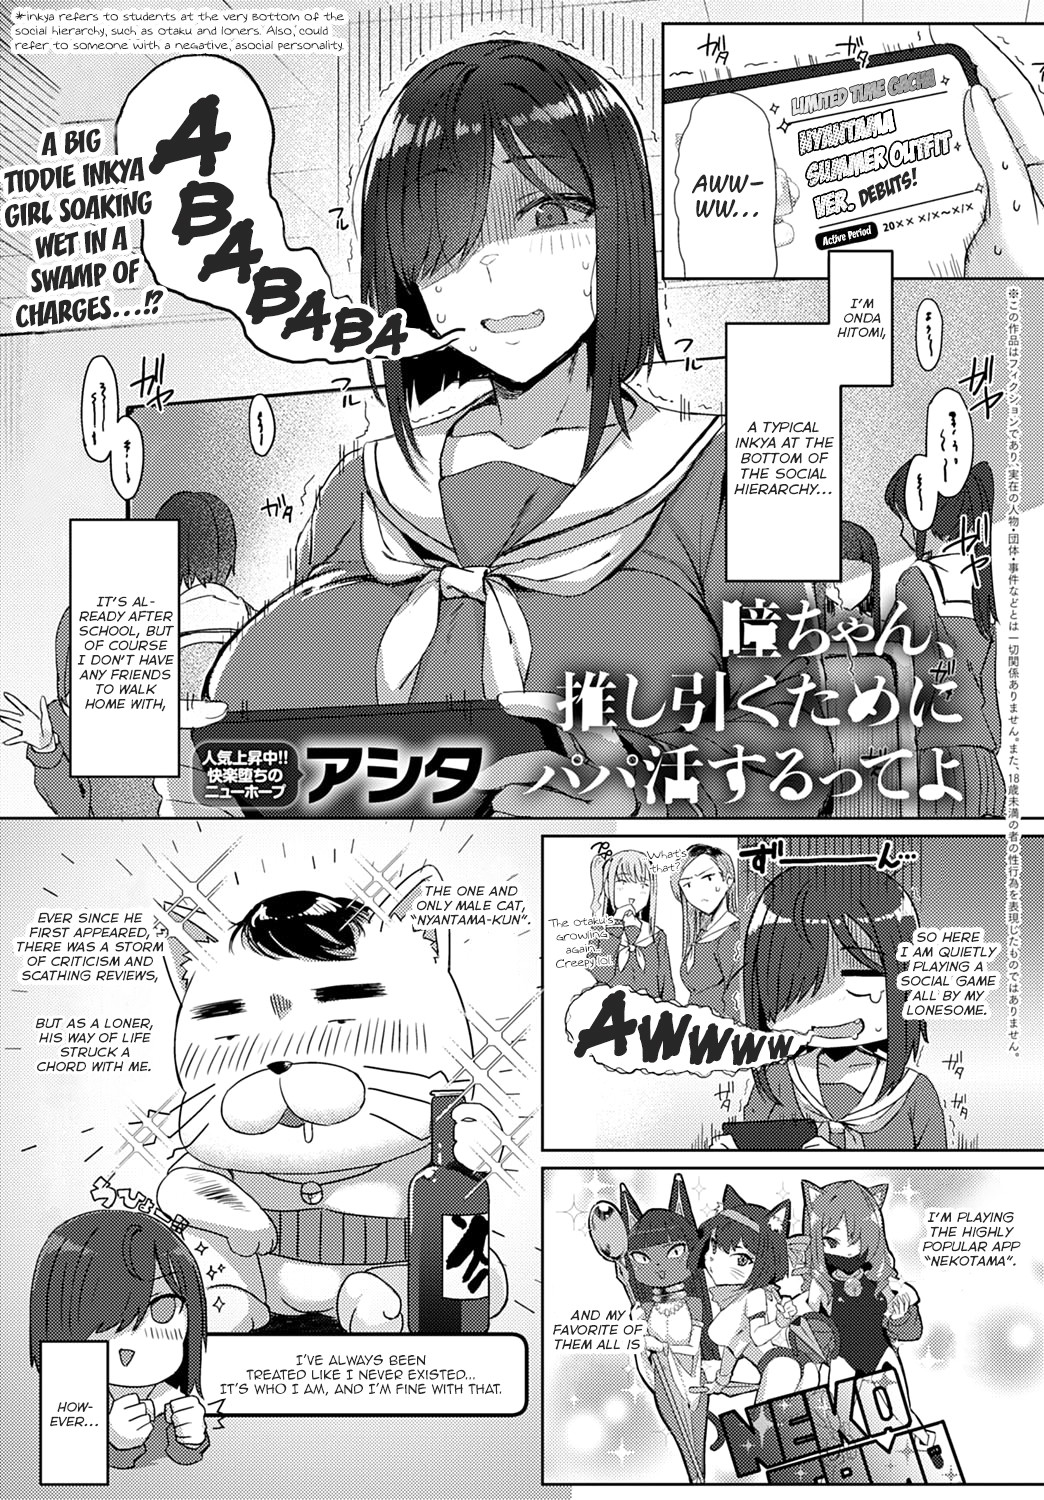 Hentai Manga Comic-Yo, Hitomi-chan Says She's Doing Sugar Dating to Roll Her Favorite Character-Read-1